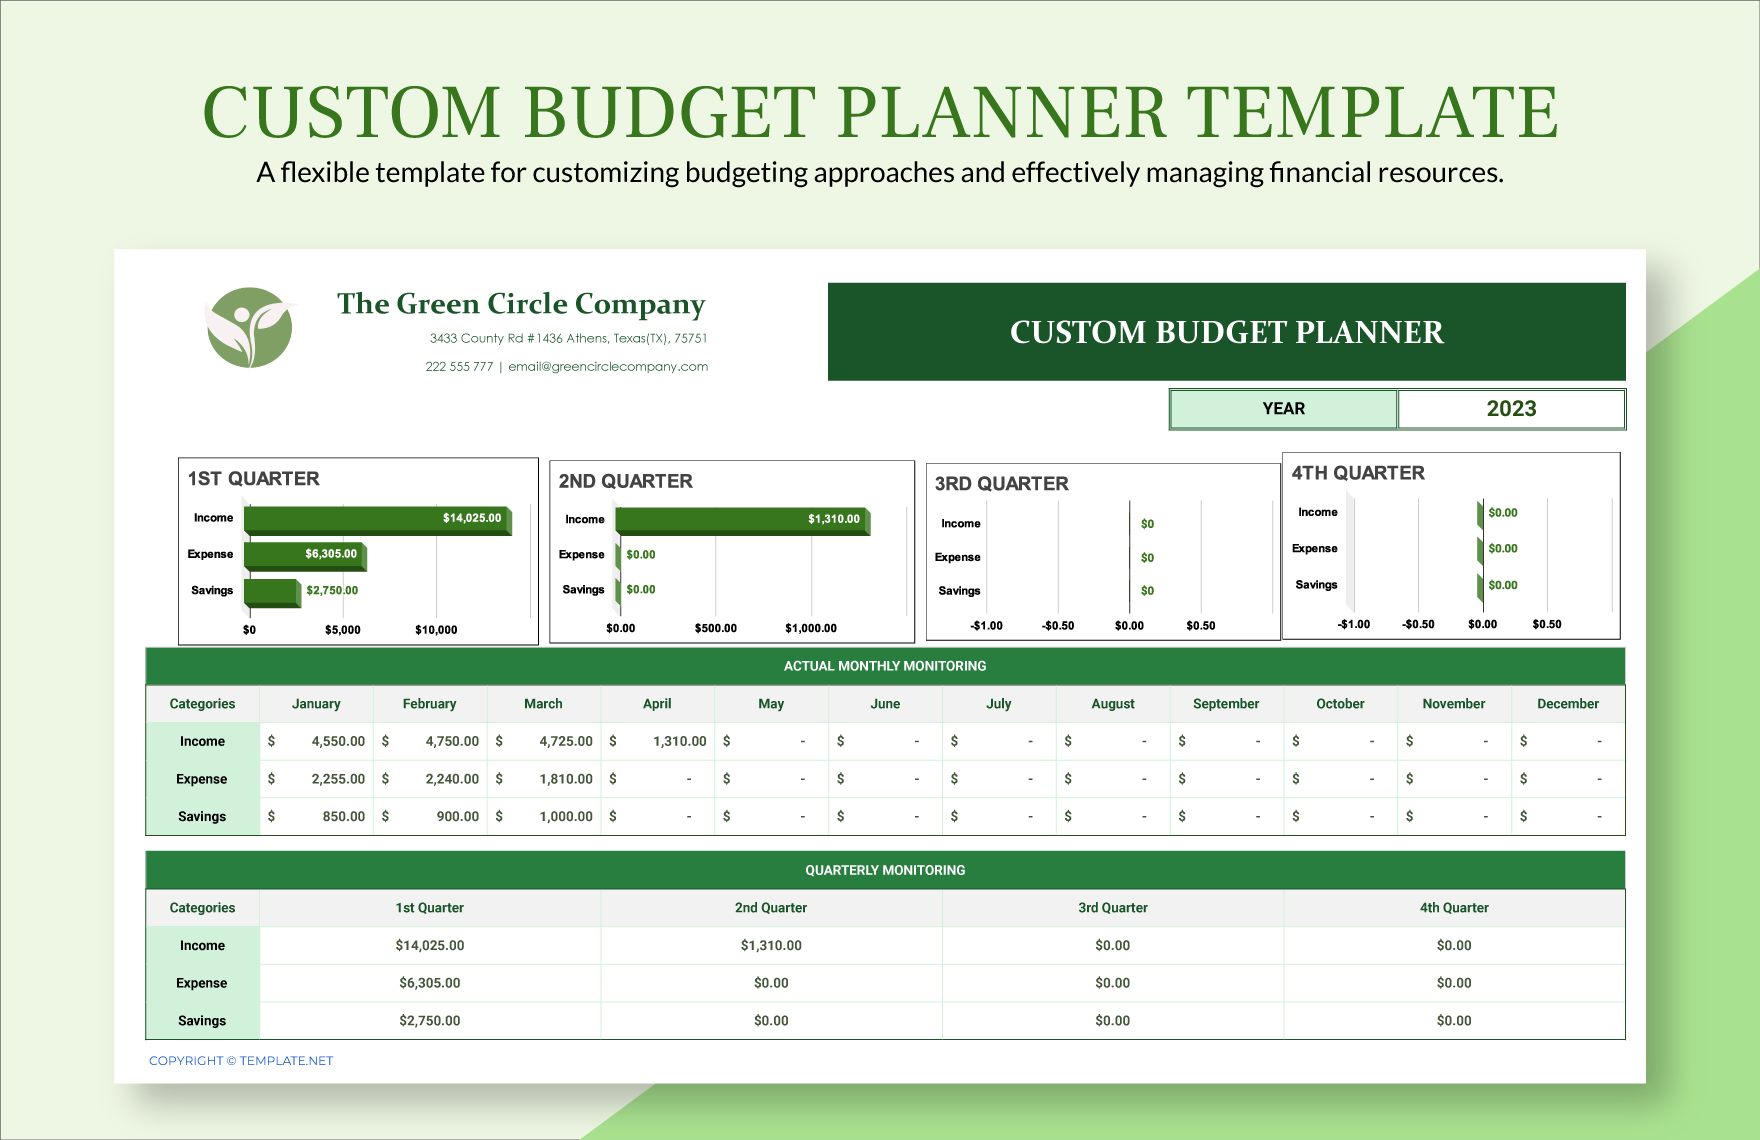 Custom Budget Planner Template